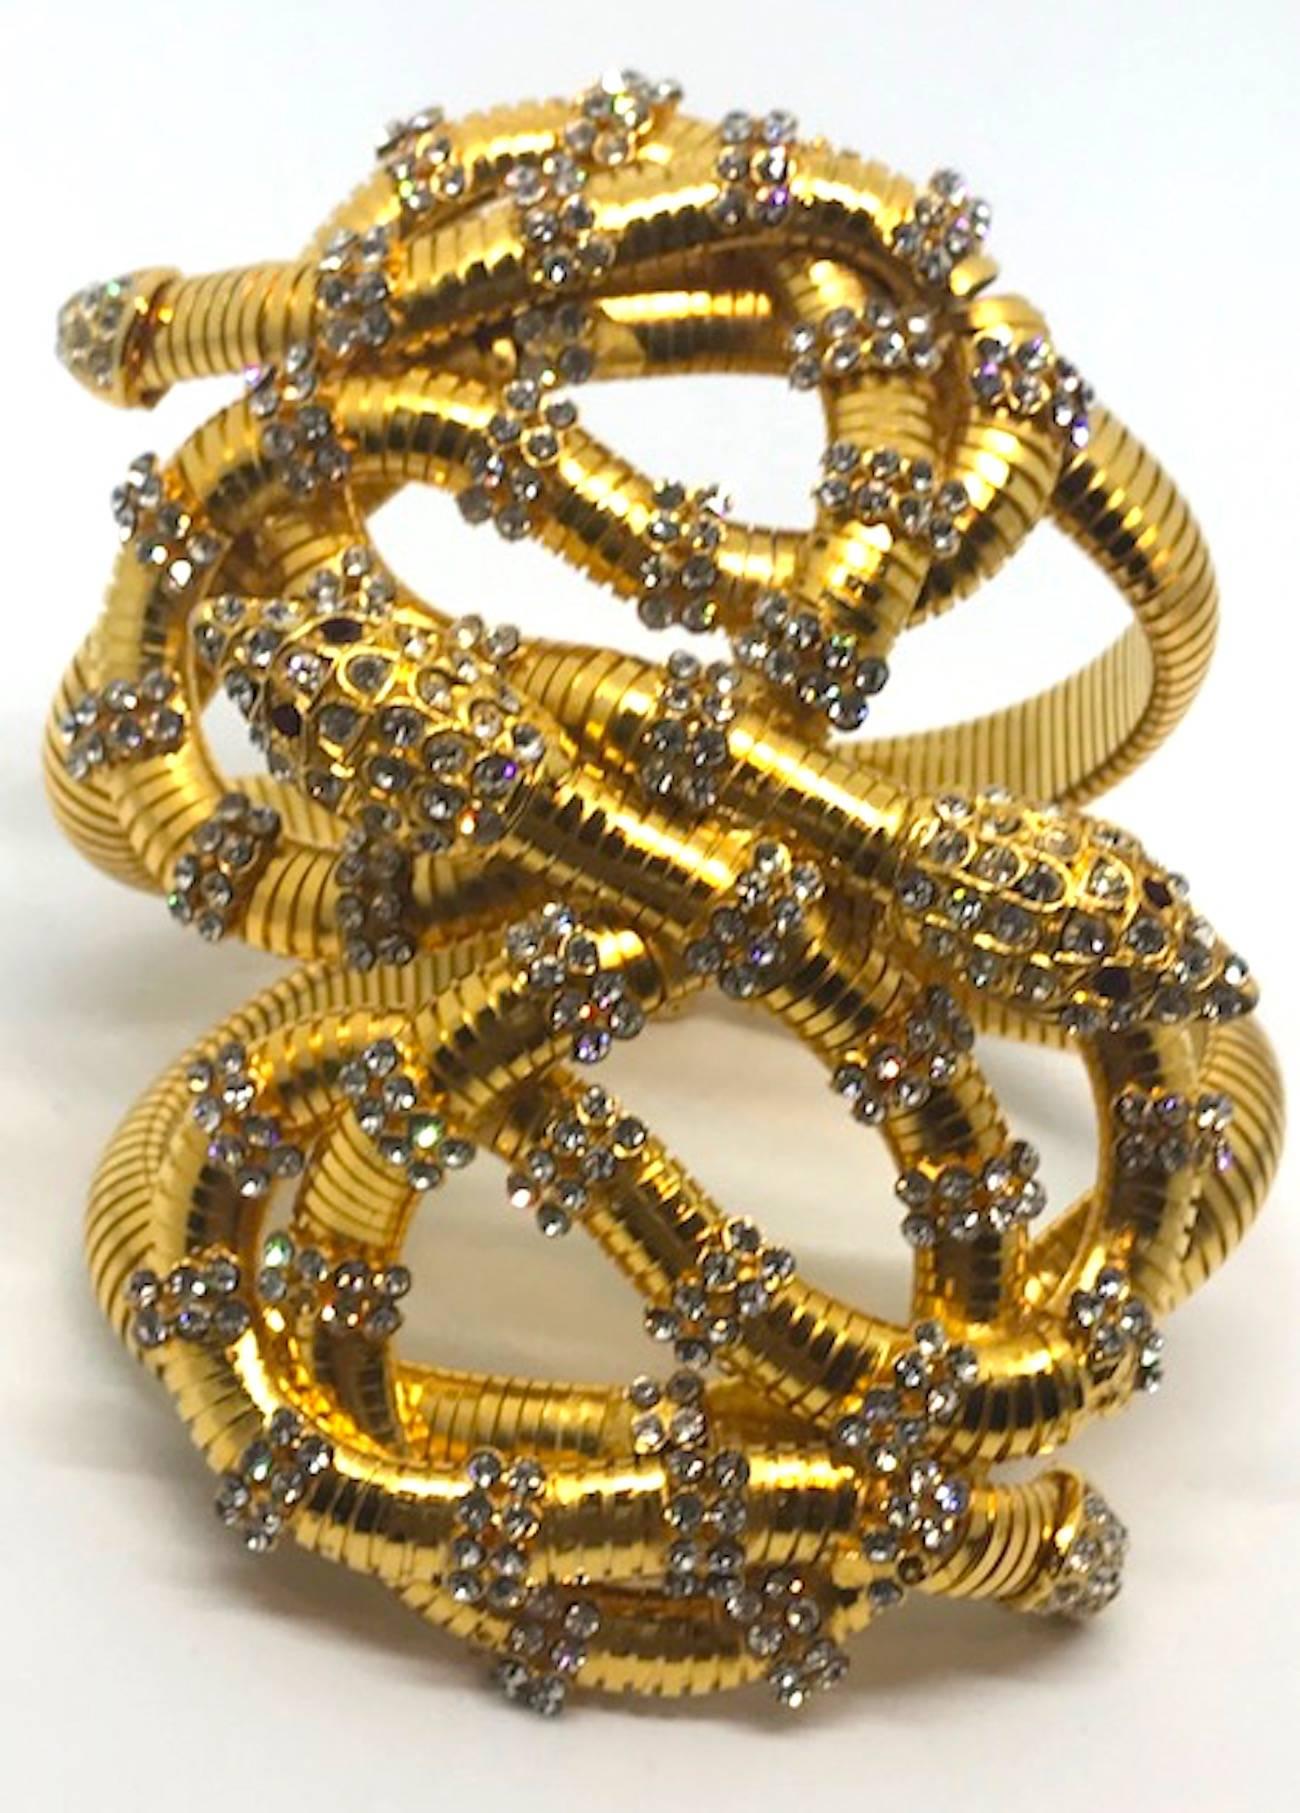 Women's De Liguoro serpent bracelet from Actress Elsa Martinelli's personal collection